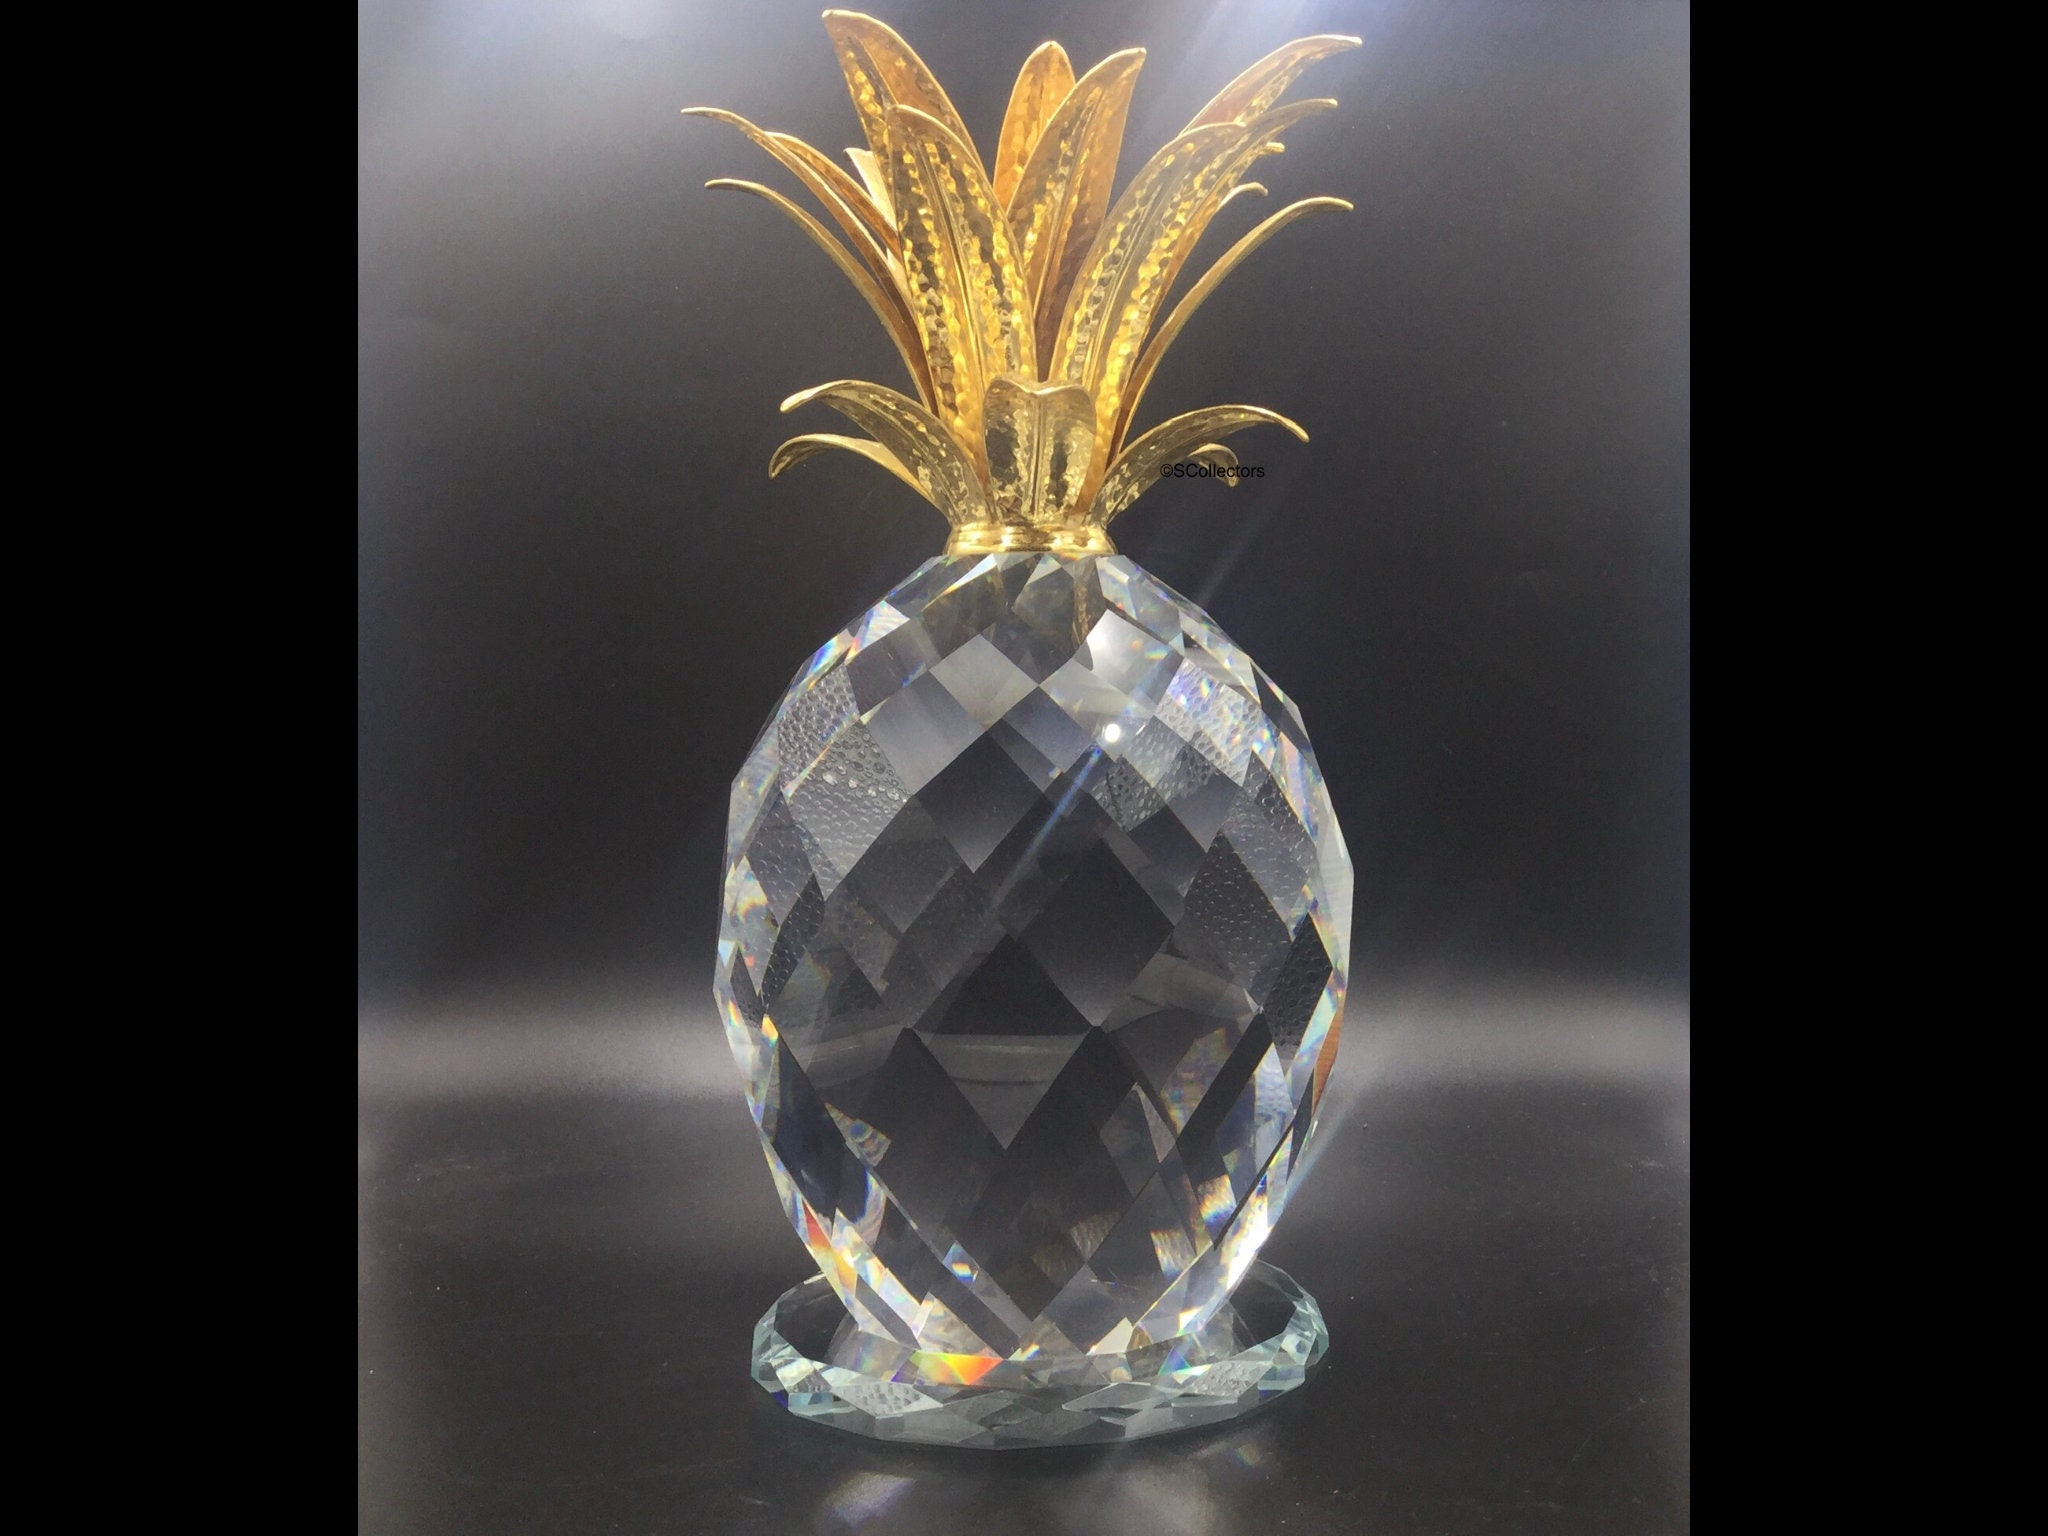 Giant Swarovski Crystal Pineapple Figurine, Large Vintage Fruit Home Decor,  With Crystal Base